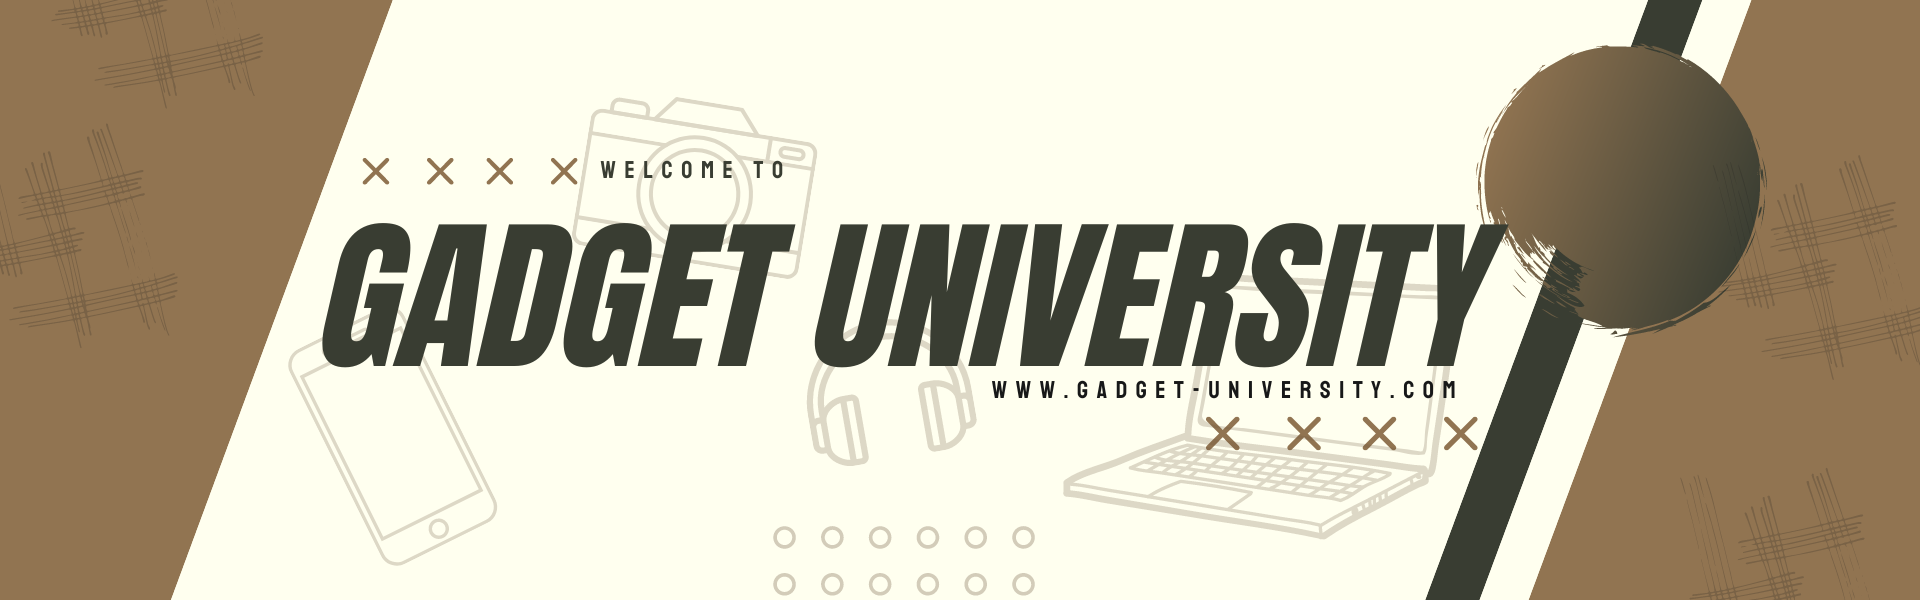 Gadget university